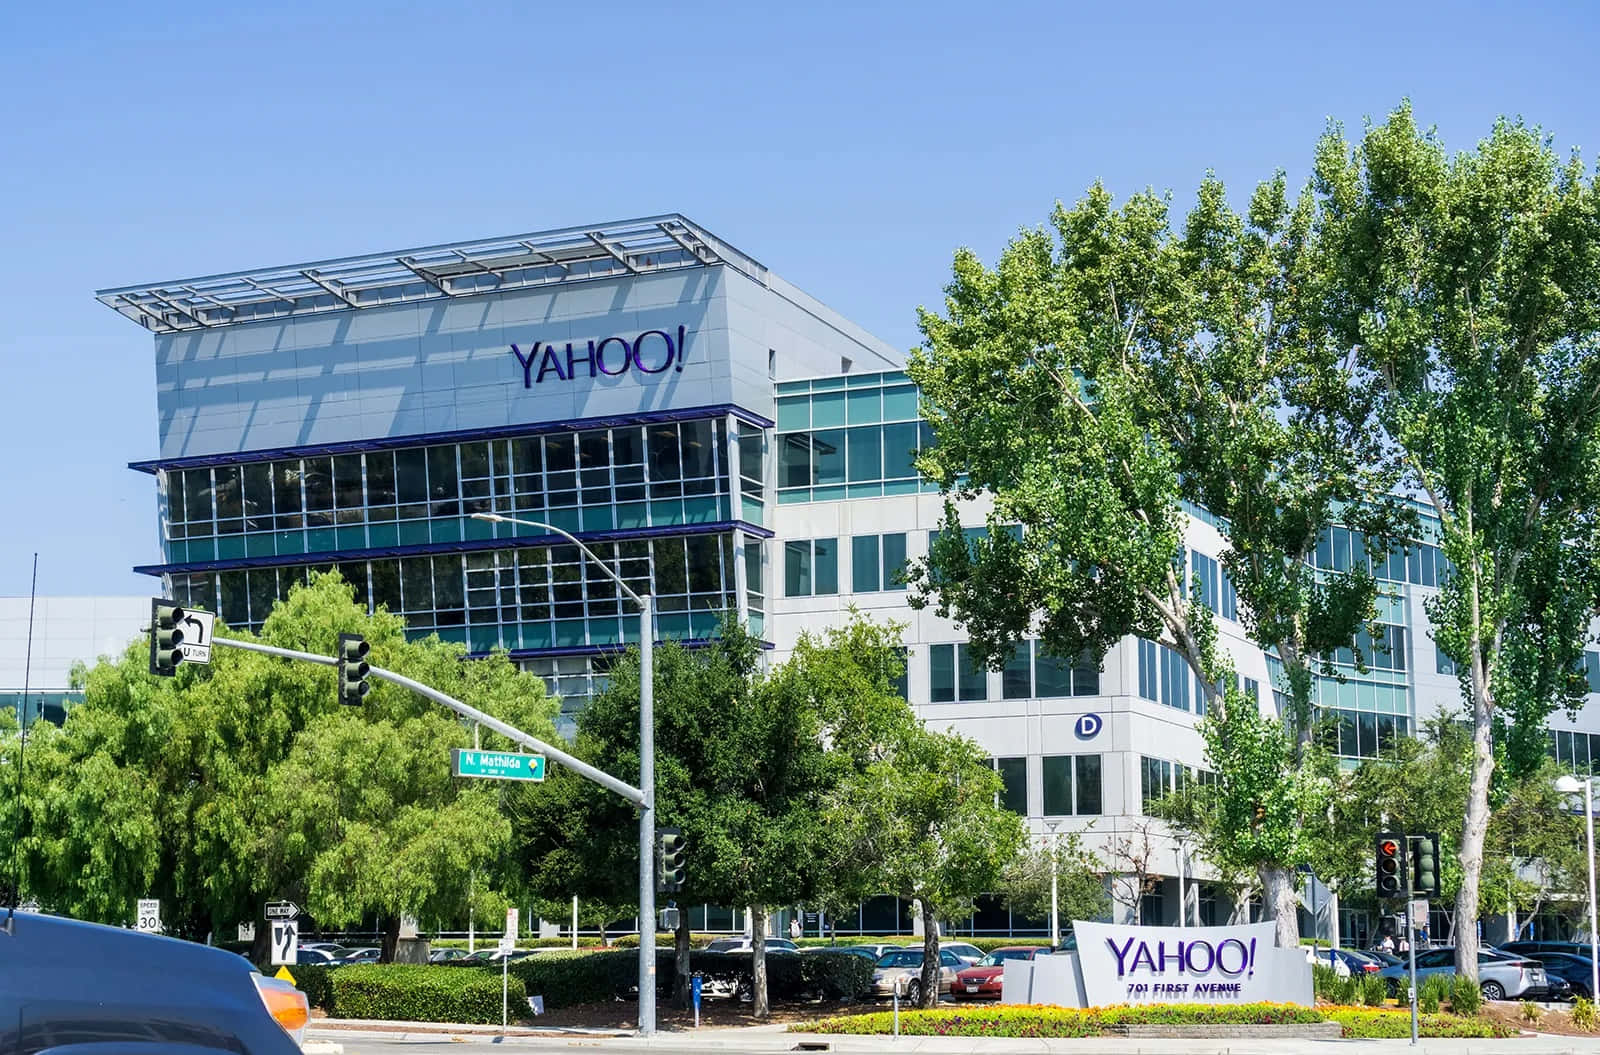 Enbil Kører Forbi En Stor Bygning Med Et Yahoo-skilt.